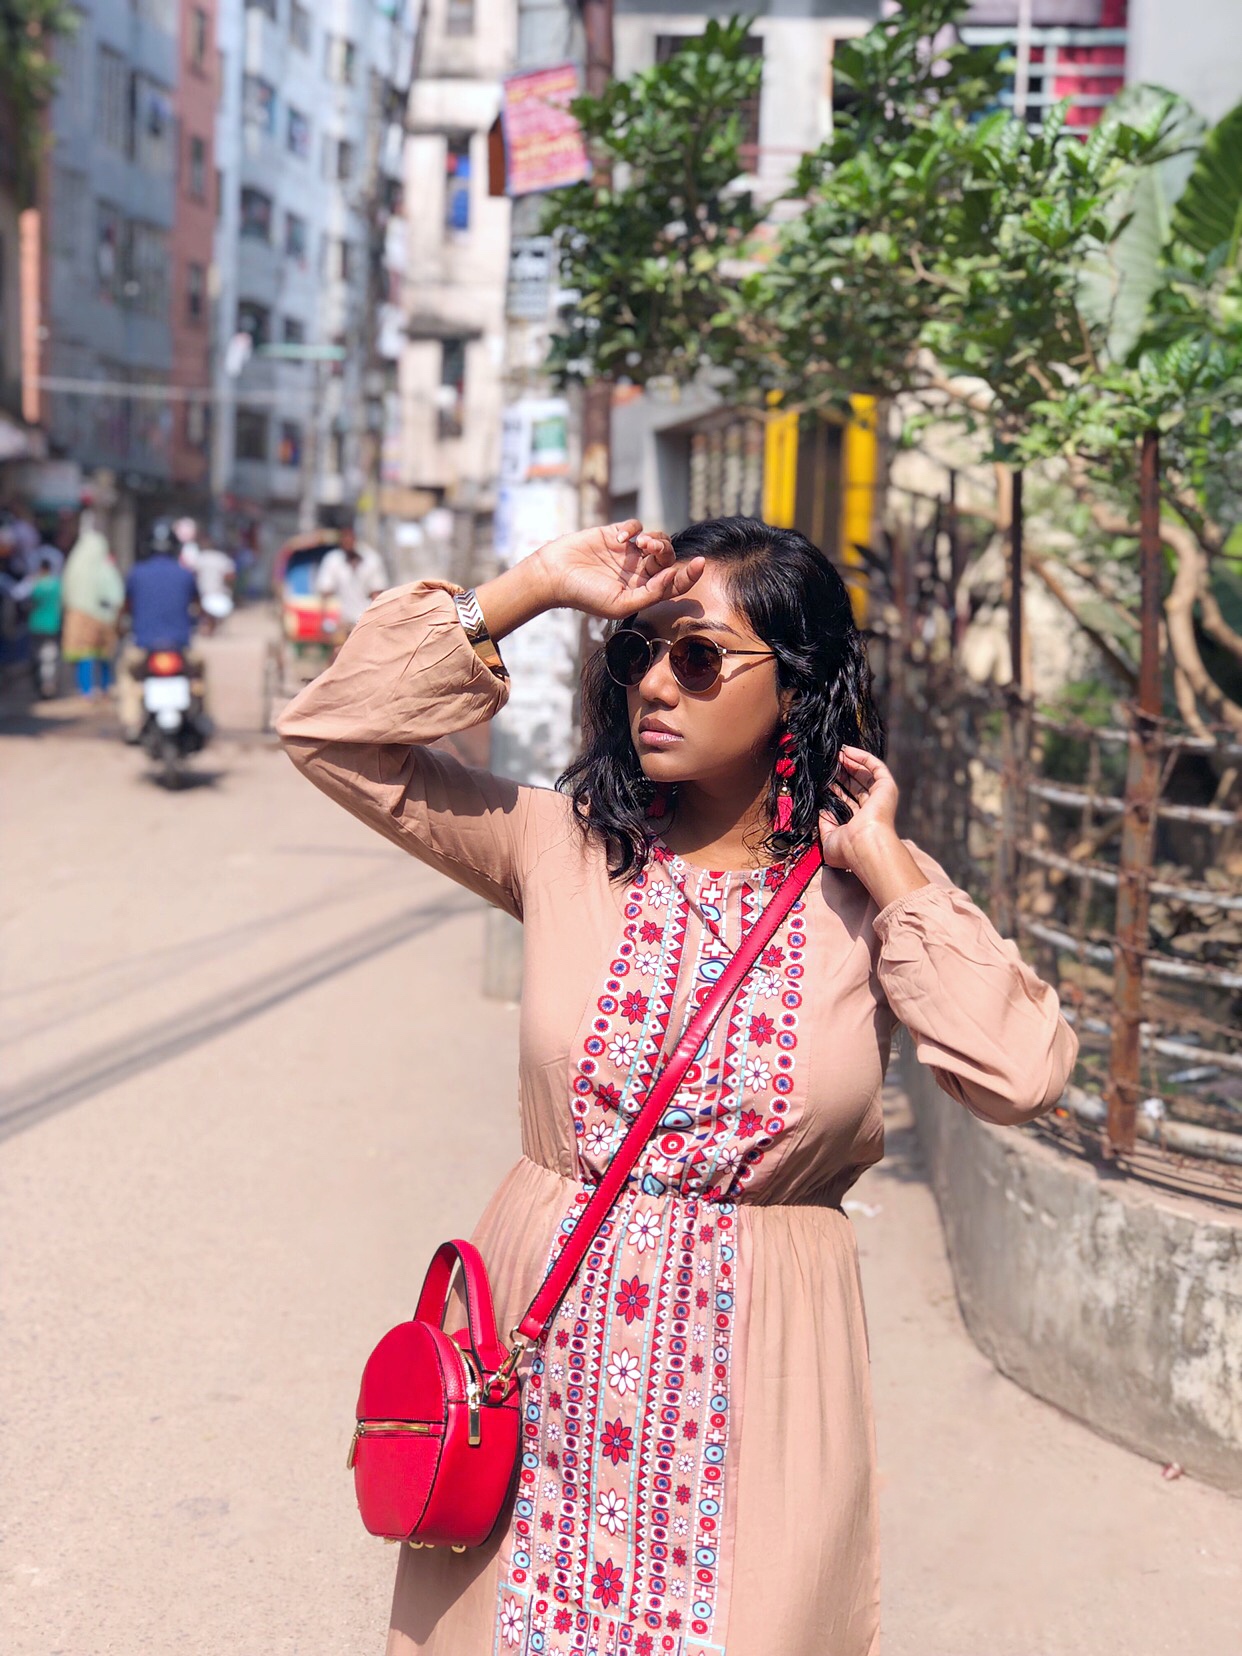 Here's-Why-you-Should-Visit-Bangladesh's-Capital-Dhaka